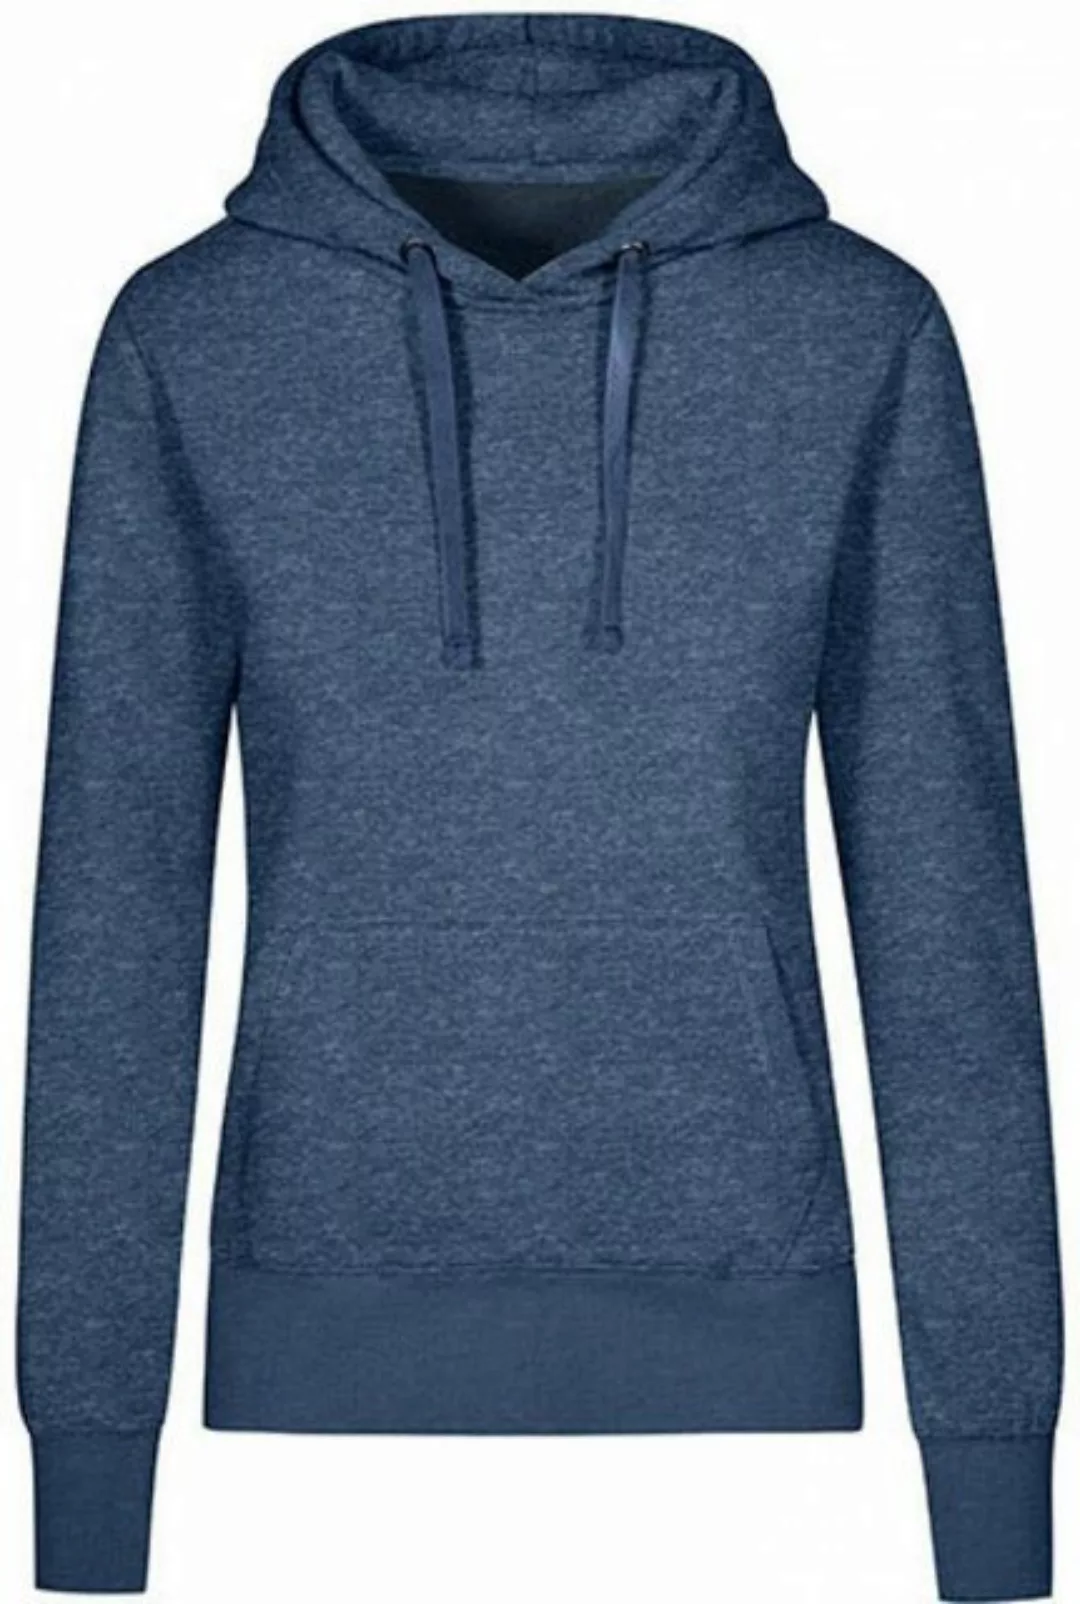 Promodoro Kapuzenpullover Damen X.O Hoody Sweater Women günstig online kaufen